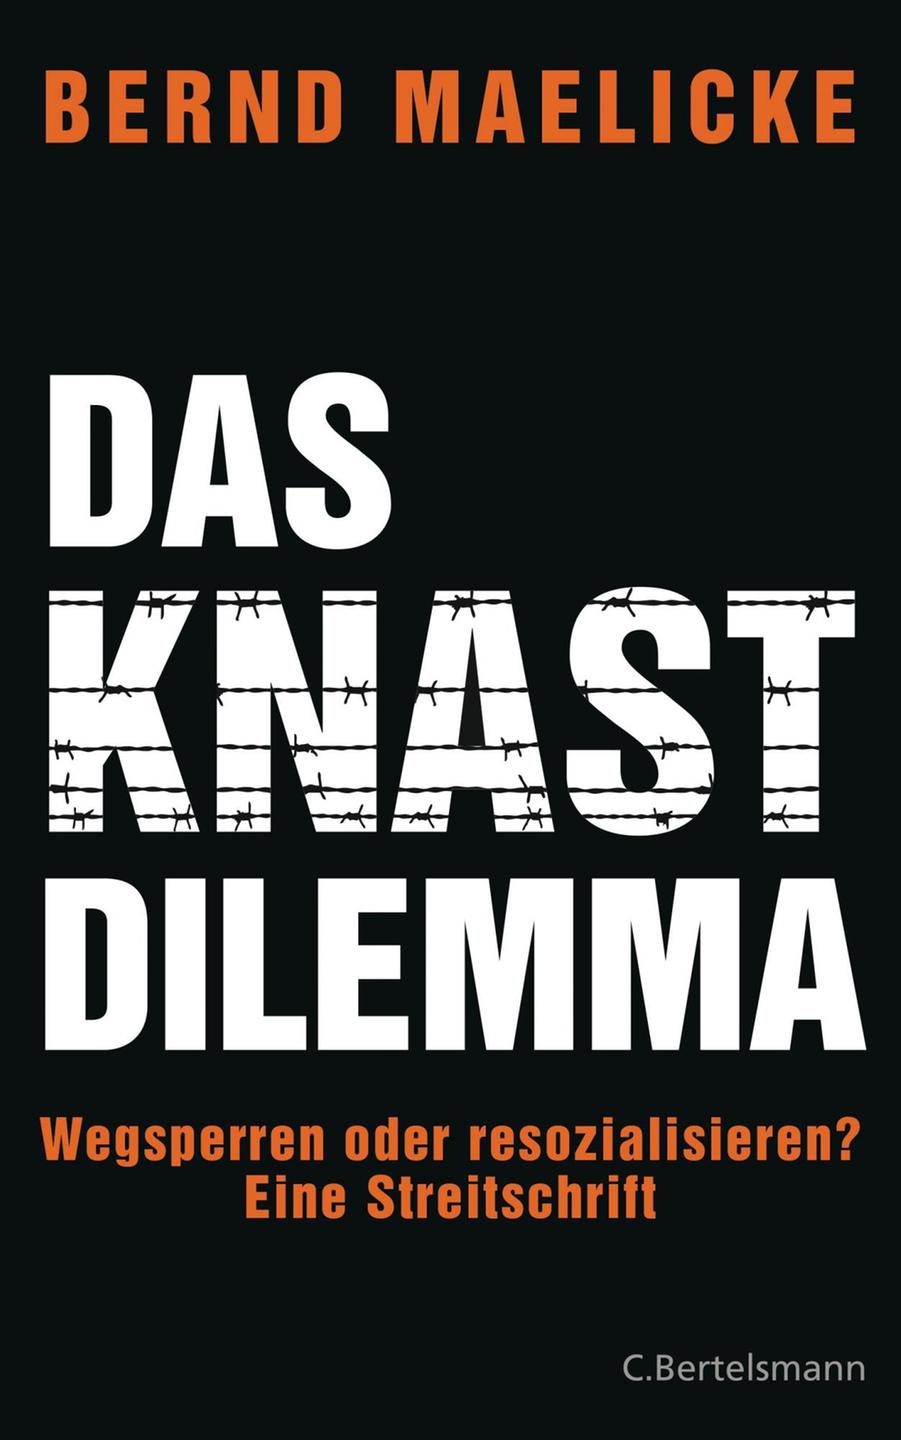 Cover Bernd Maelicke "Das Knast Dilemma"